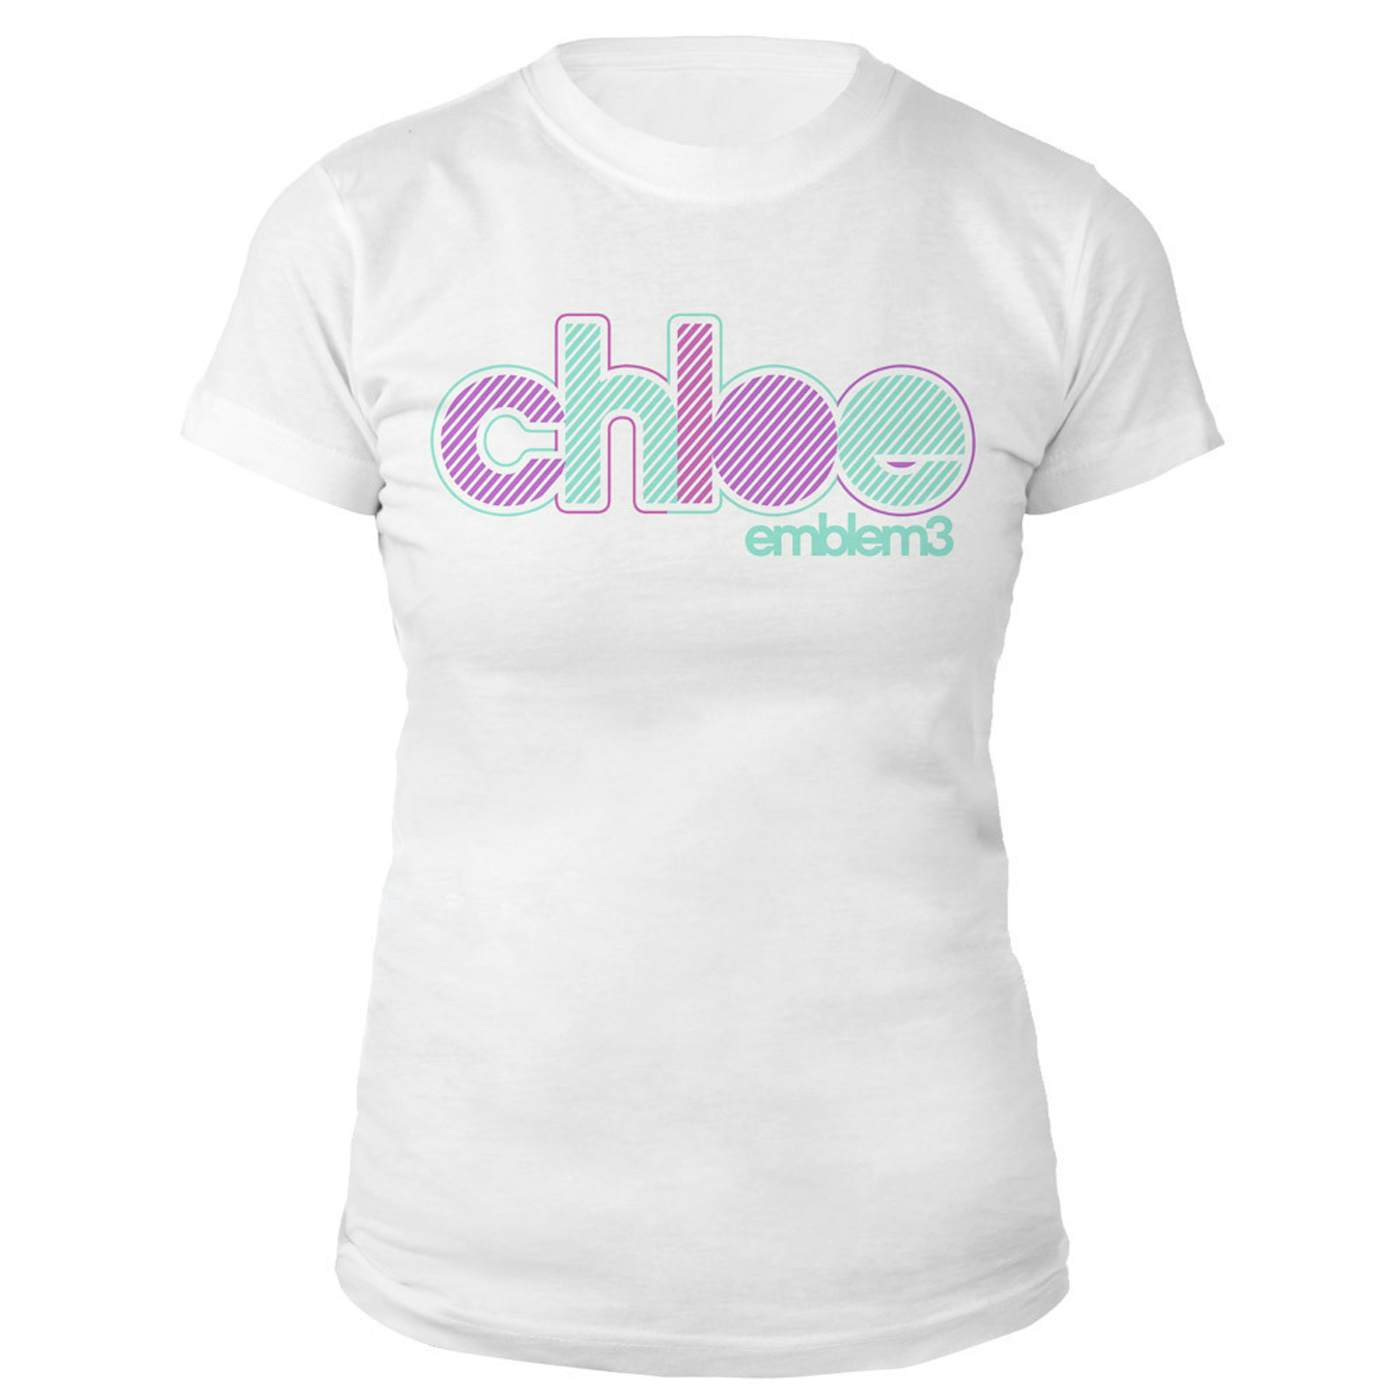 Emblem3 Chloe Girl's Tee